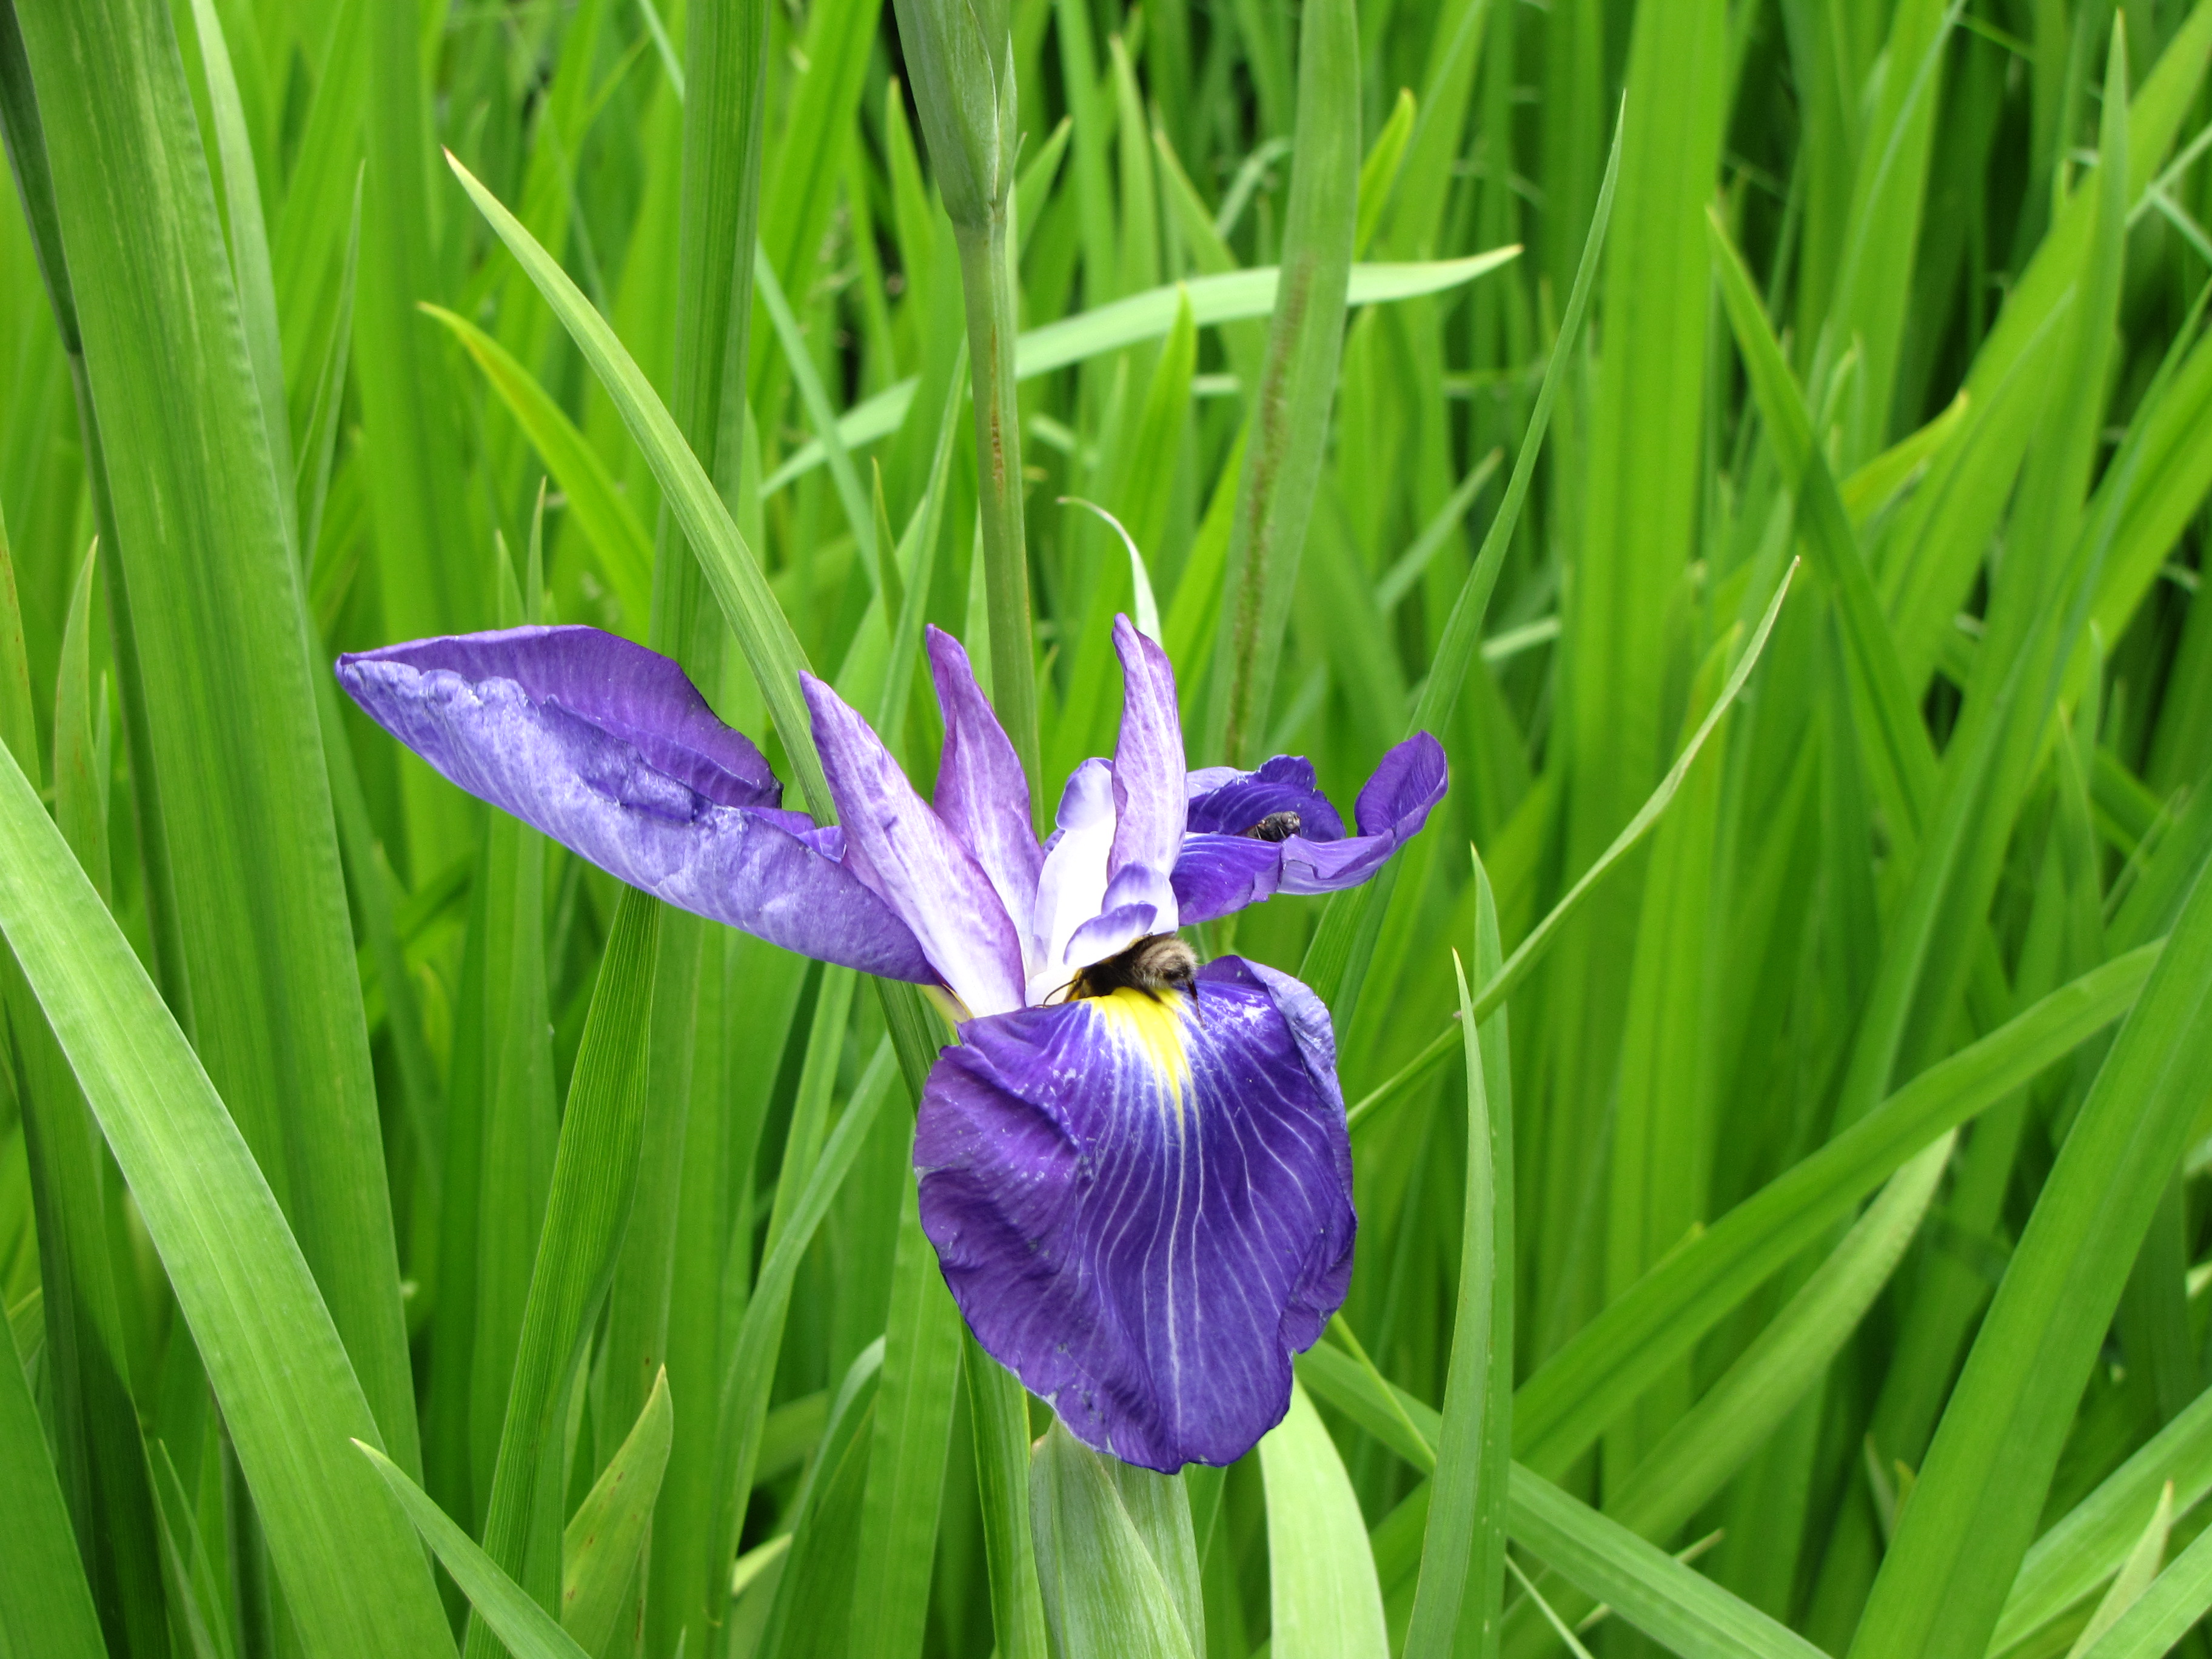 File:Iris mauve 22.JPG - Wikimedia Commons